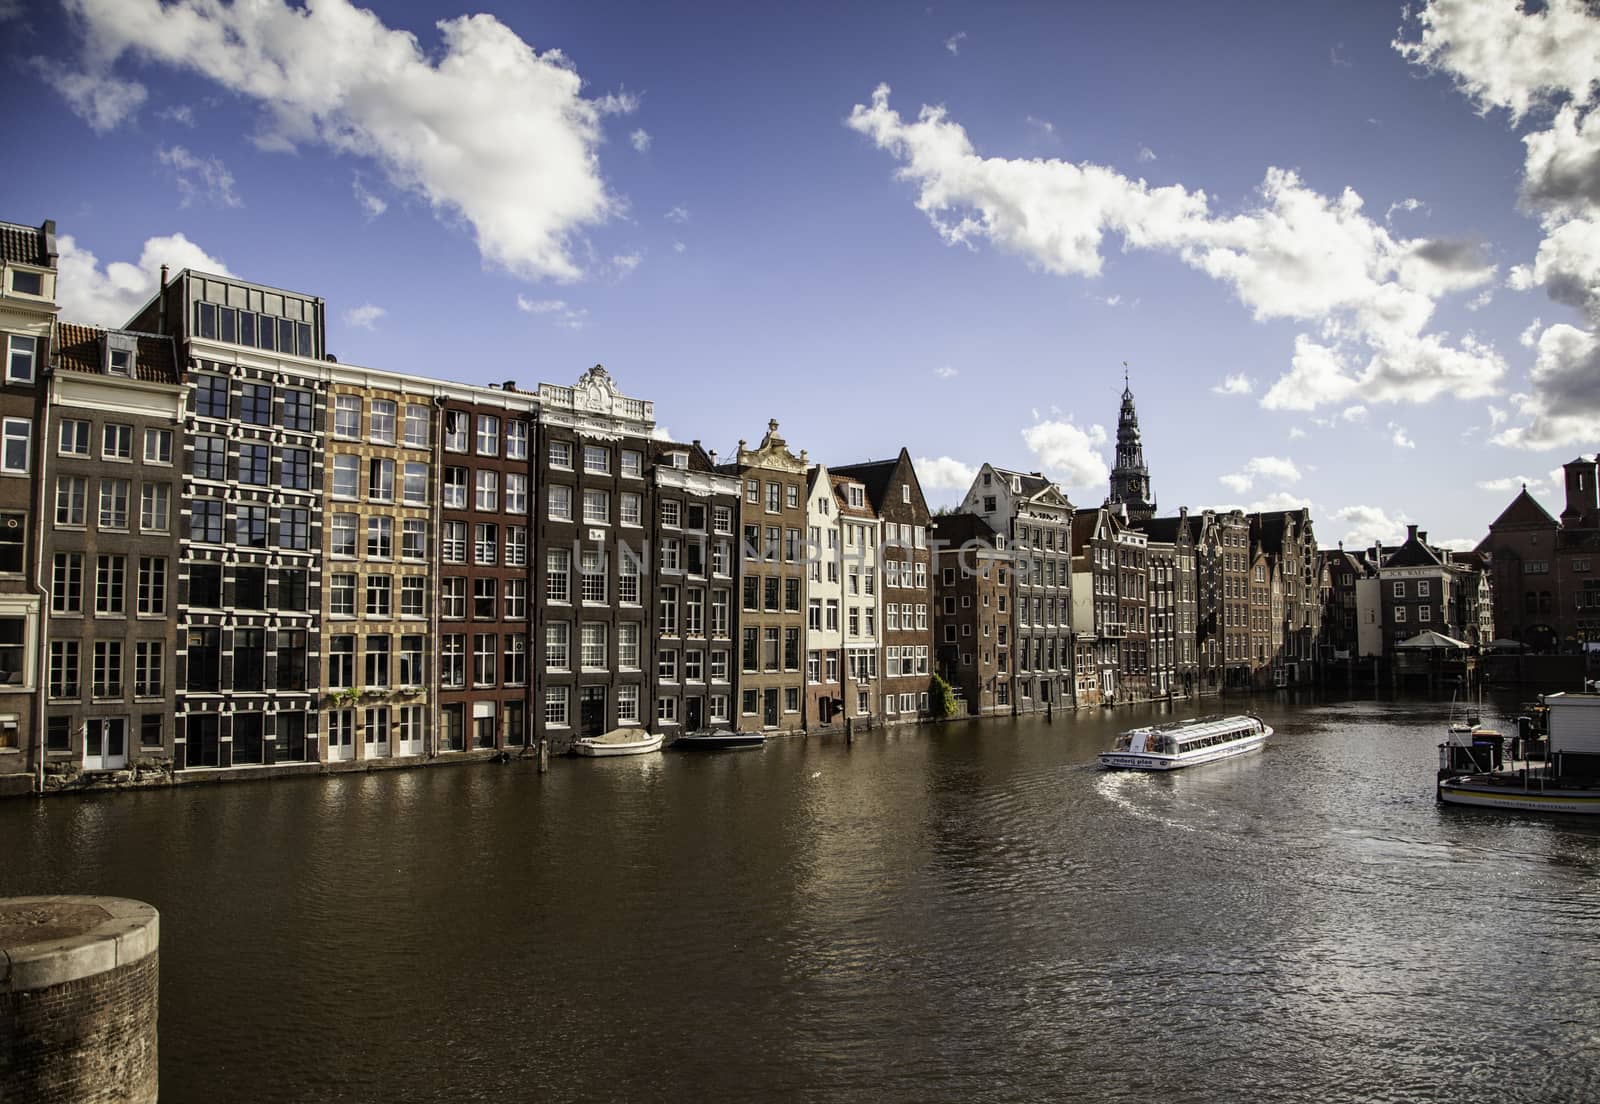 Houses in Amsterdam by esebene